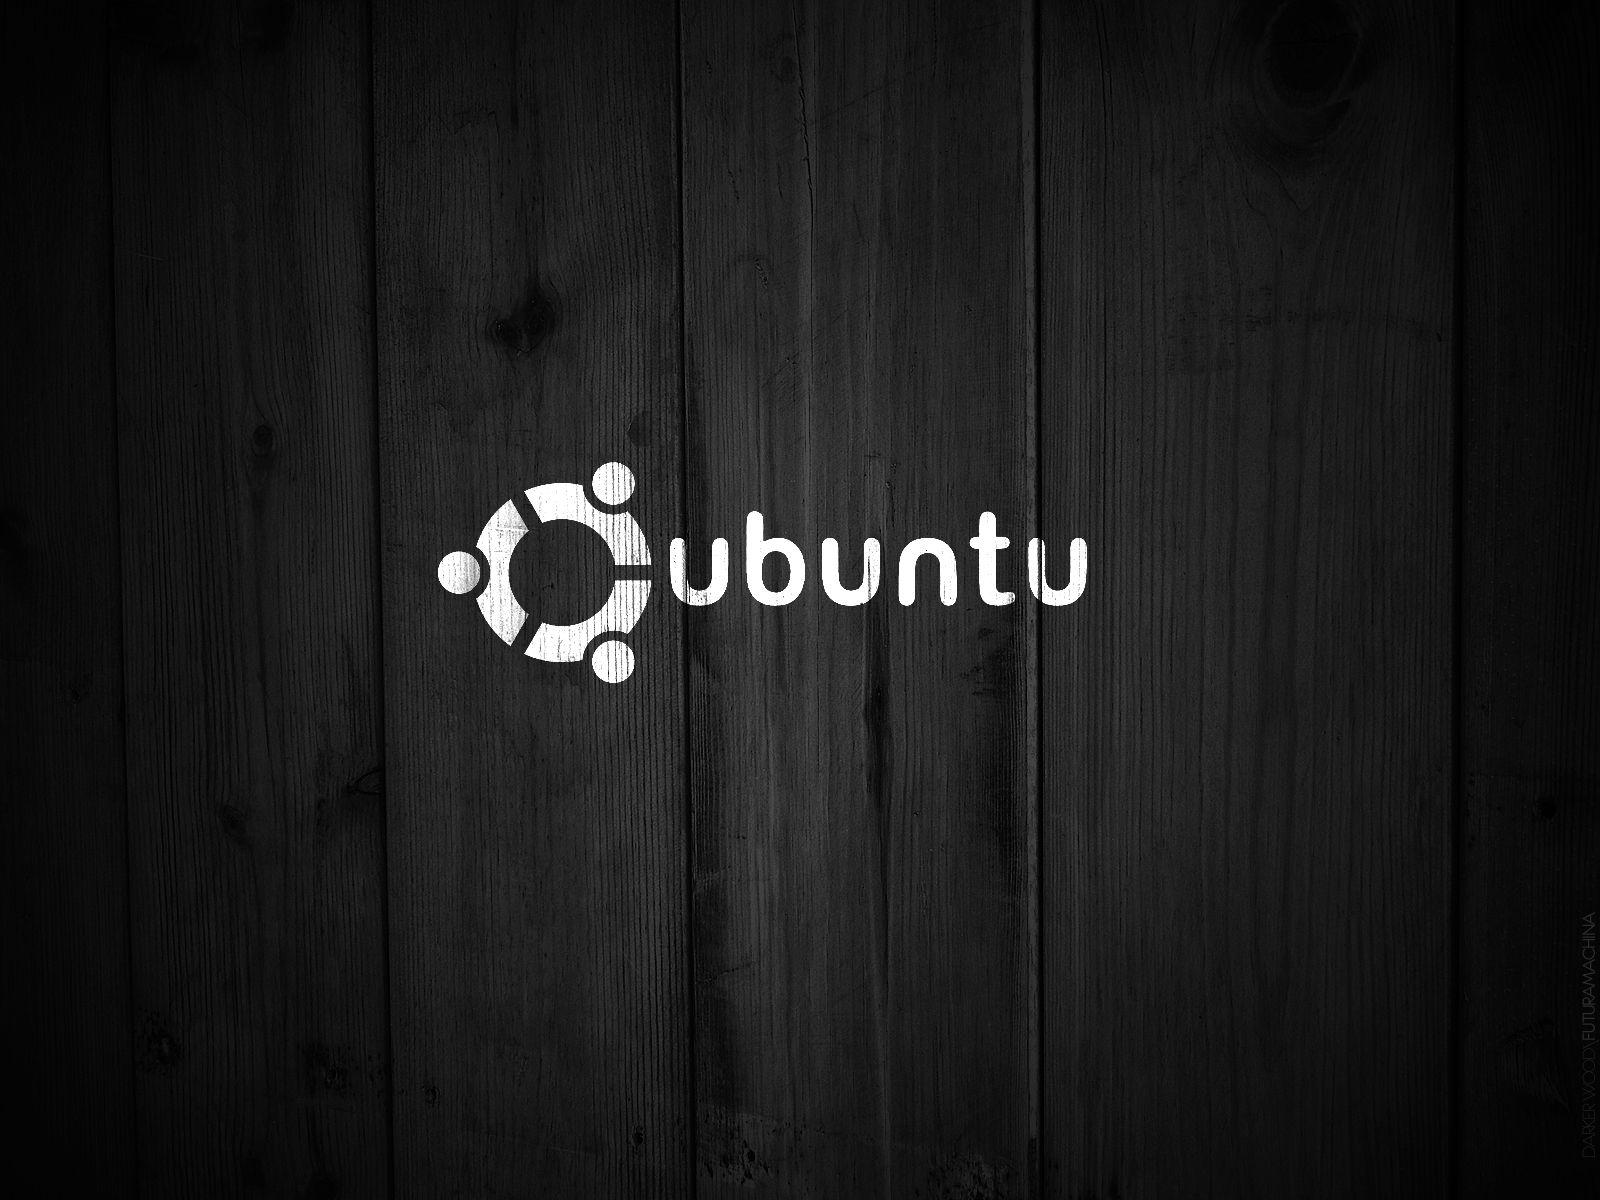 Ubuntu HD Logo Wallpaper. Desktop picture, Computer